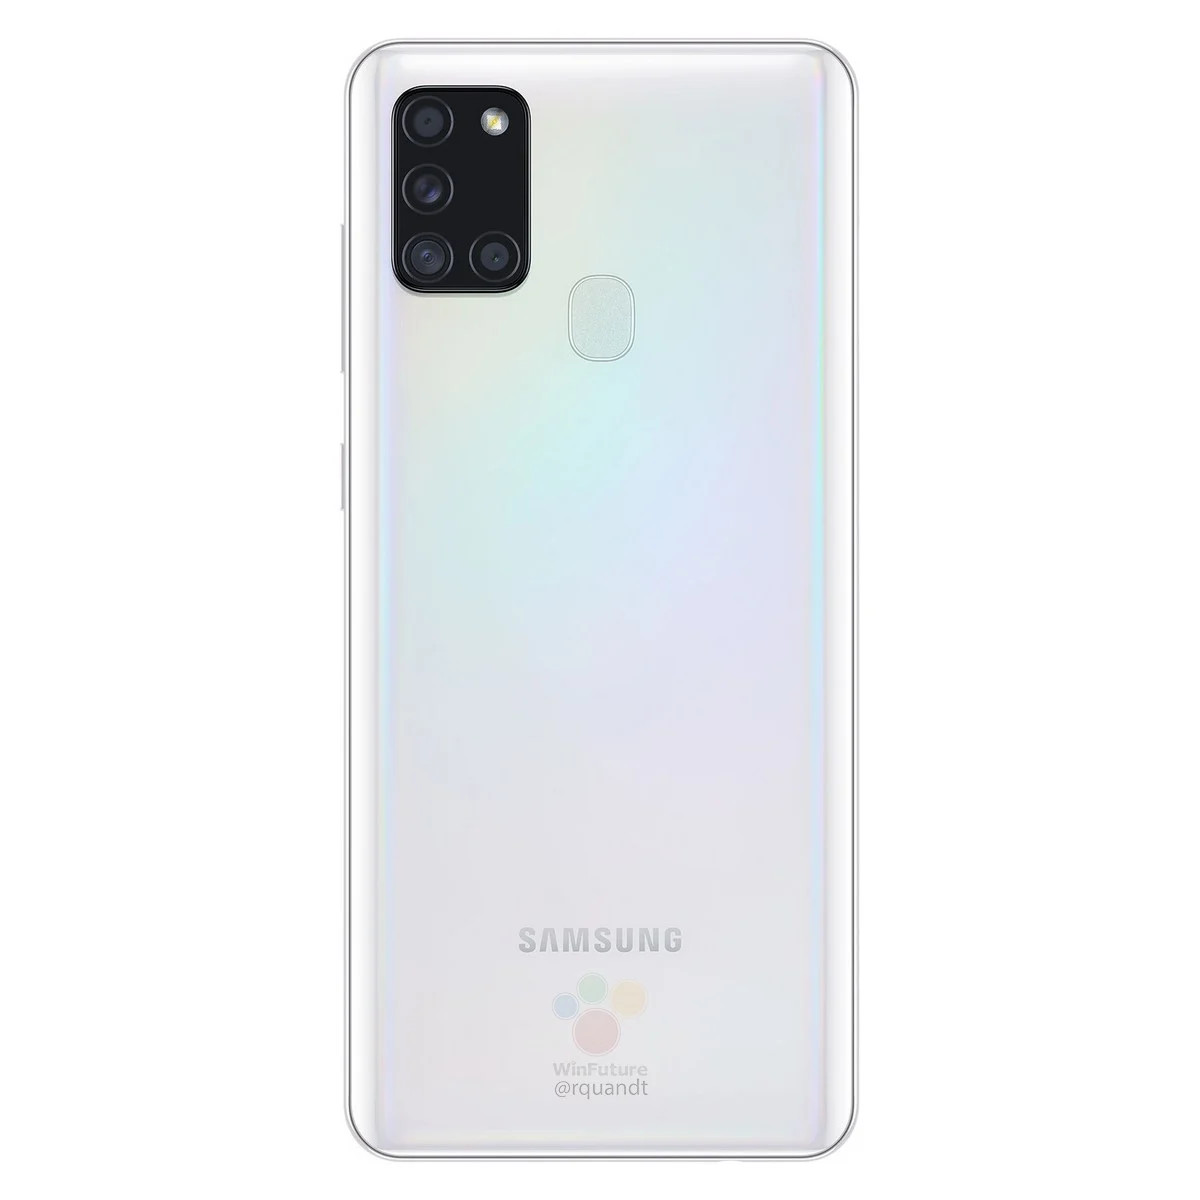 Samsung-Galaxy-A21s-1589366030-0-0.jpg